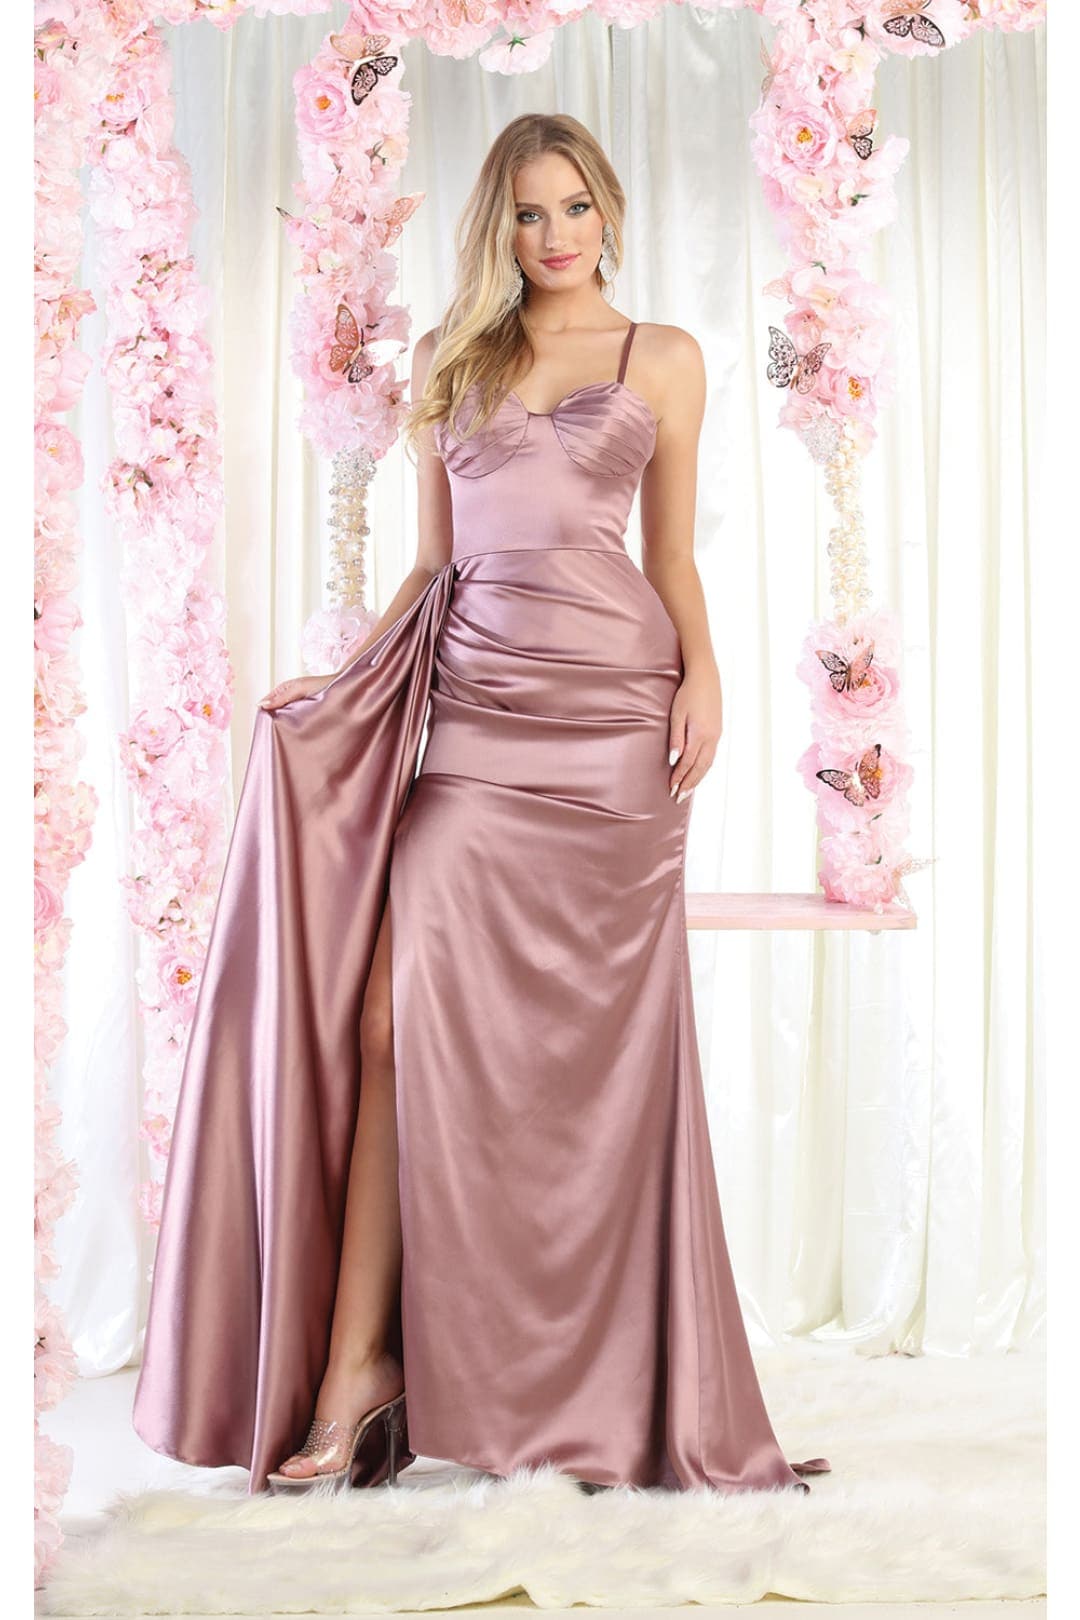 Royal Queen RQ7960 Satin Simple Bridesmaids Dress - MAUVE / 4 - Dress